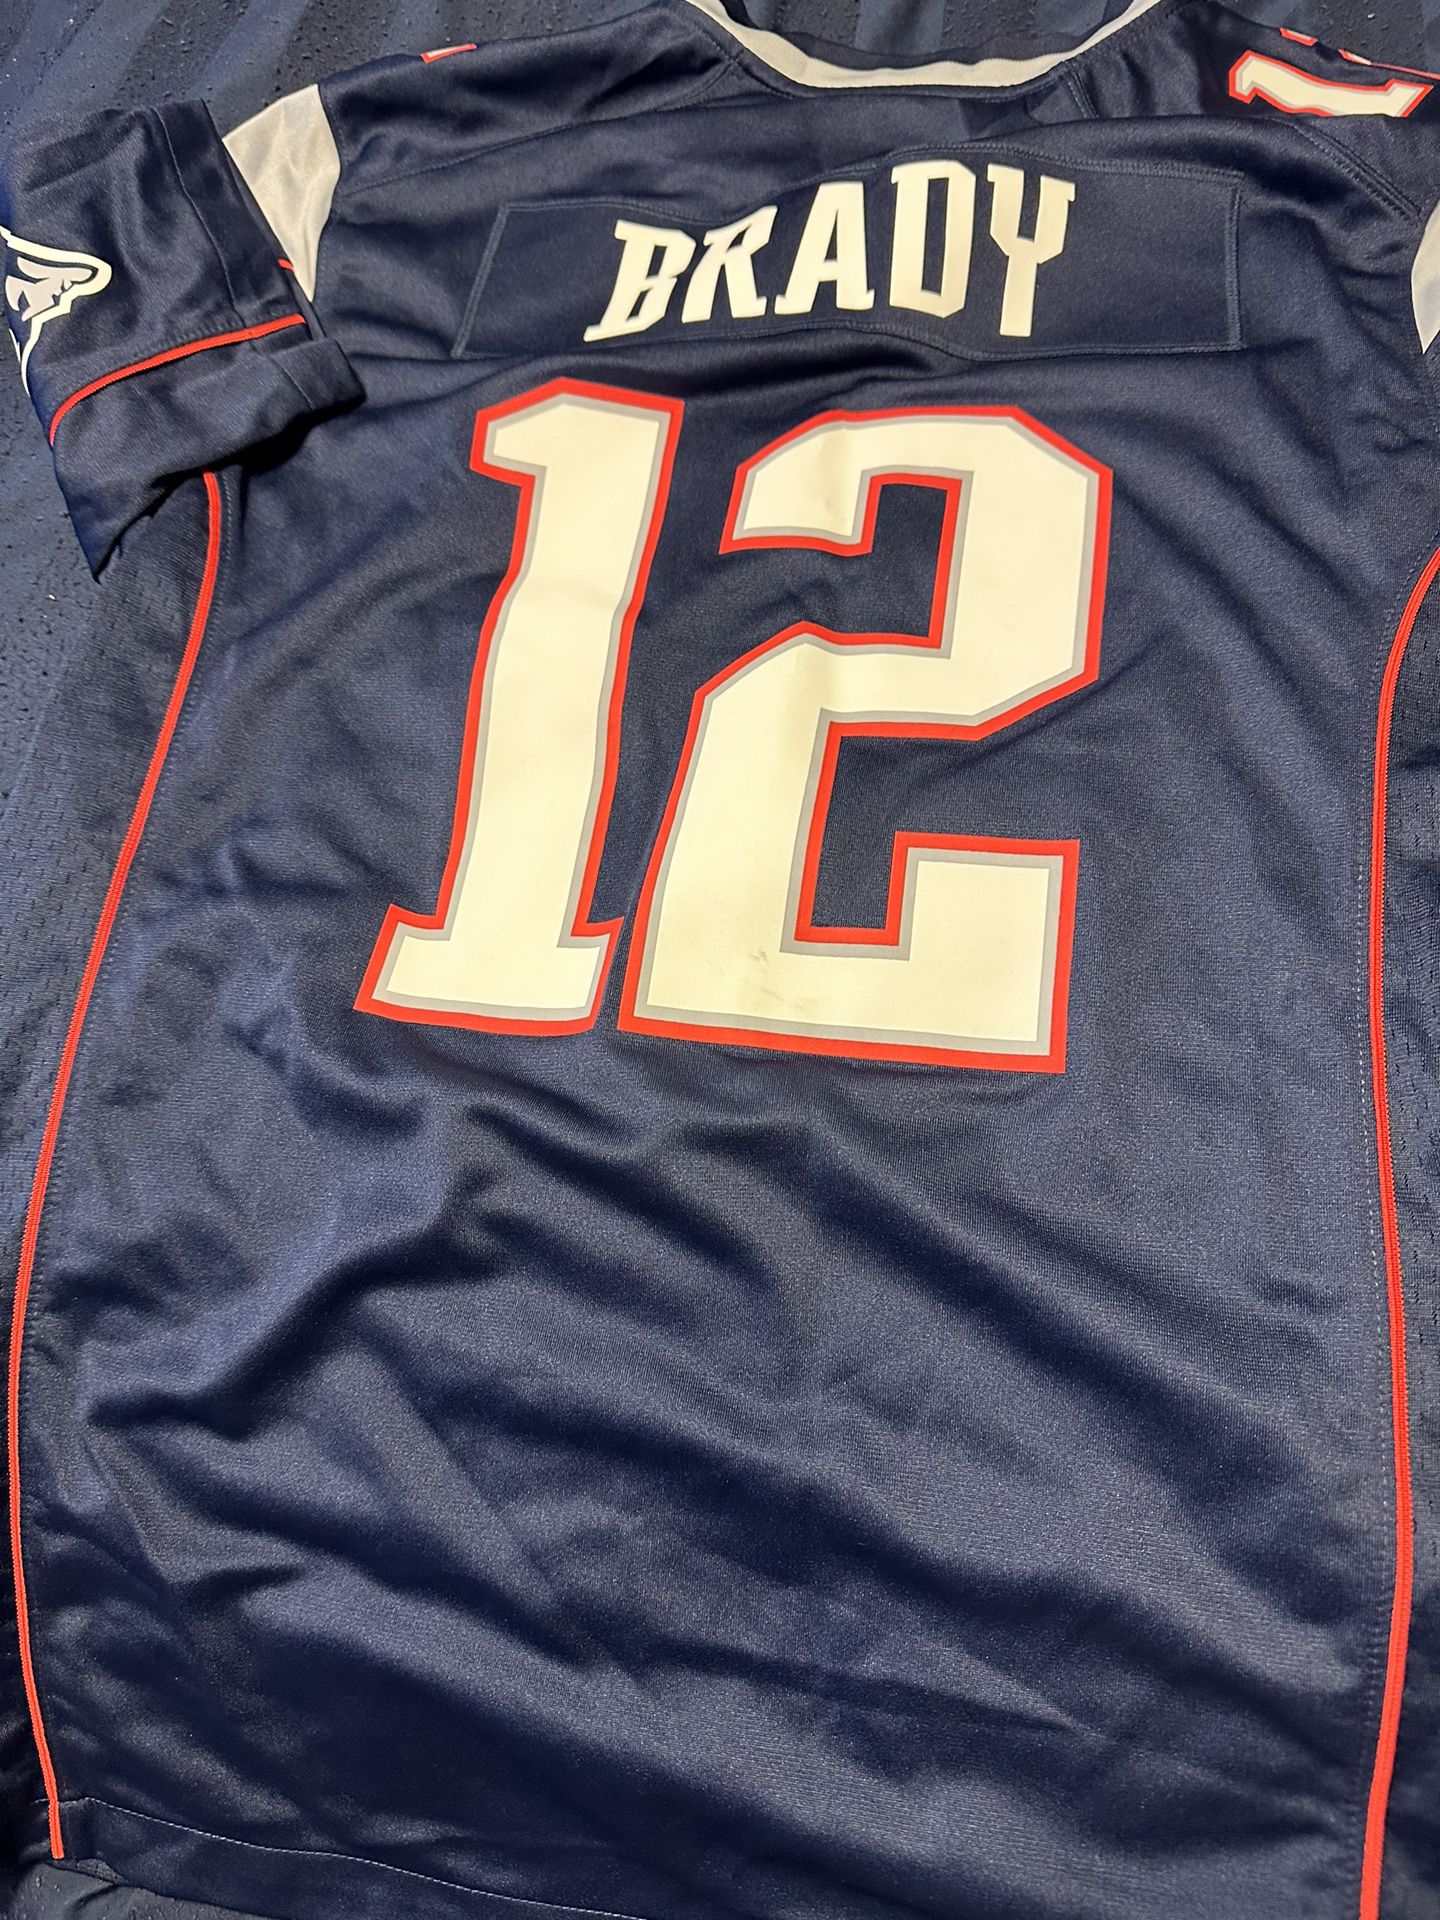 Tom Brady Blue Super Bowl Jersey New 